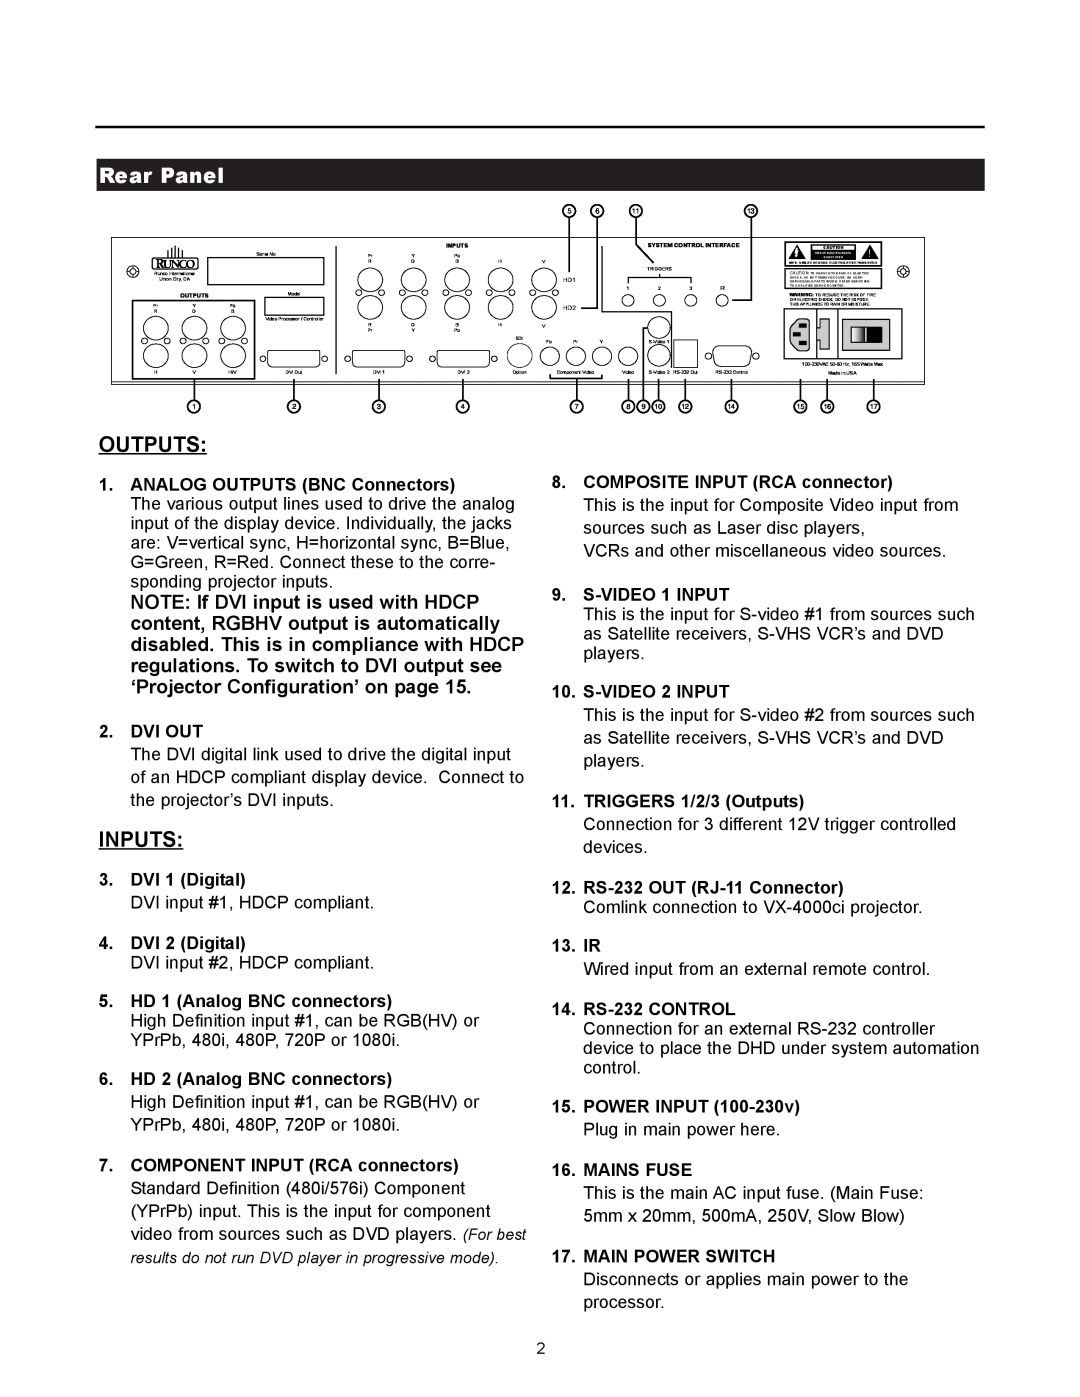 Runco VX-4000ci Rear Panel, Outputs, Inputs, ANALOG OUTPUTS BNC Connectors, Dvi Out, DVI 1 Digital, DVI 2 Digital, 13. IR 